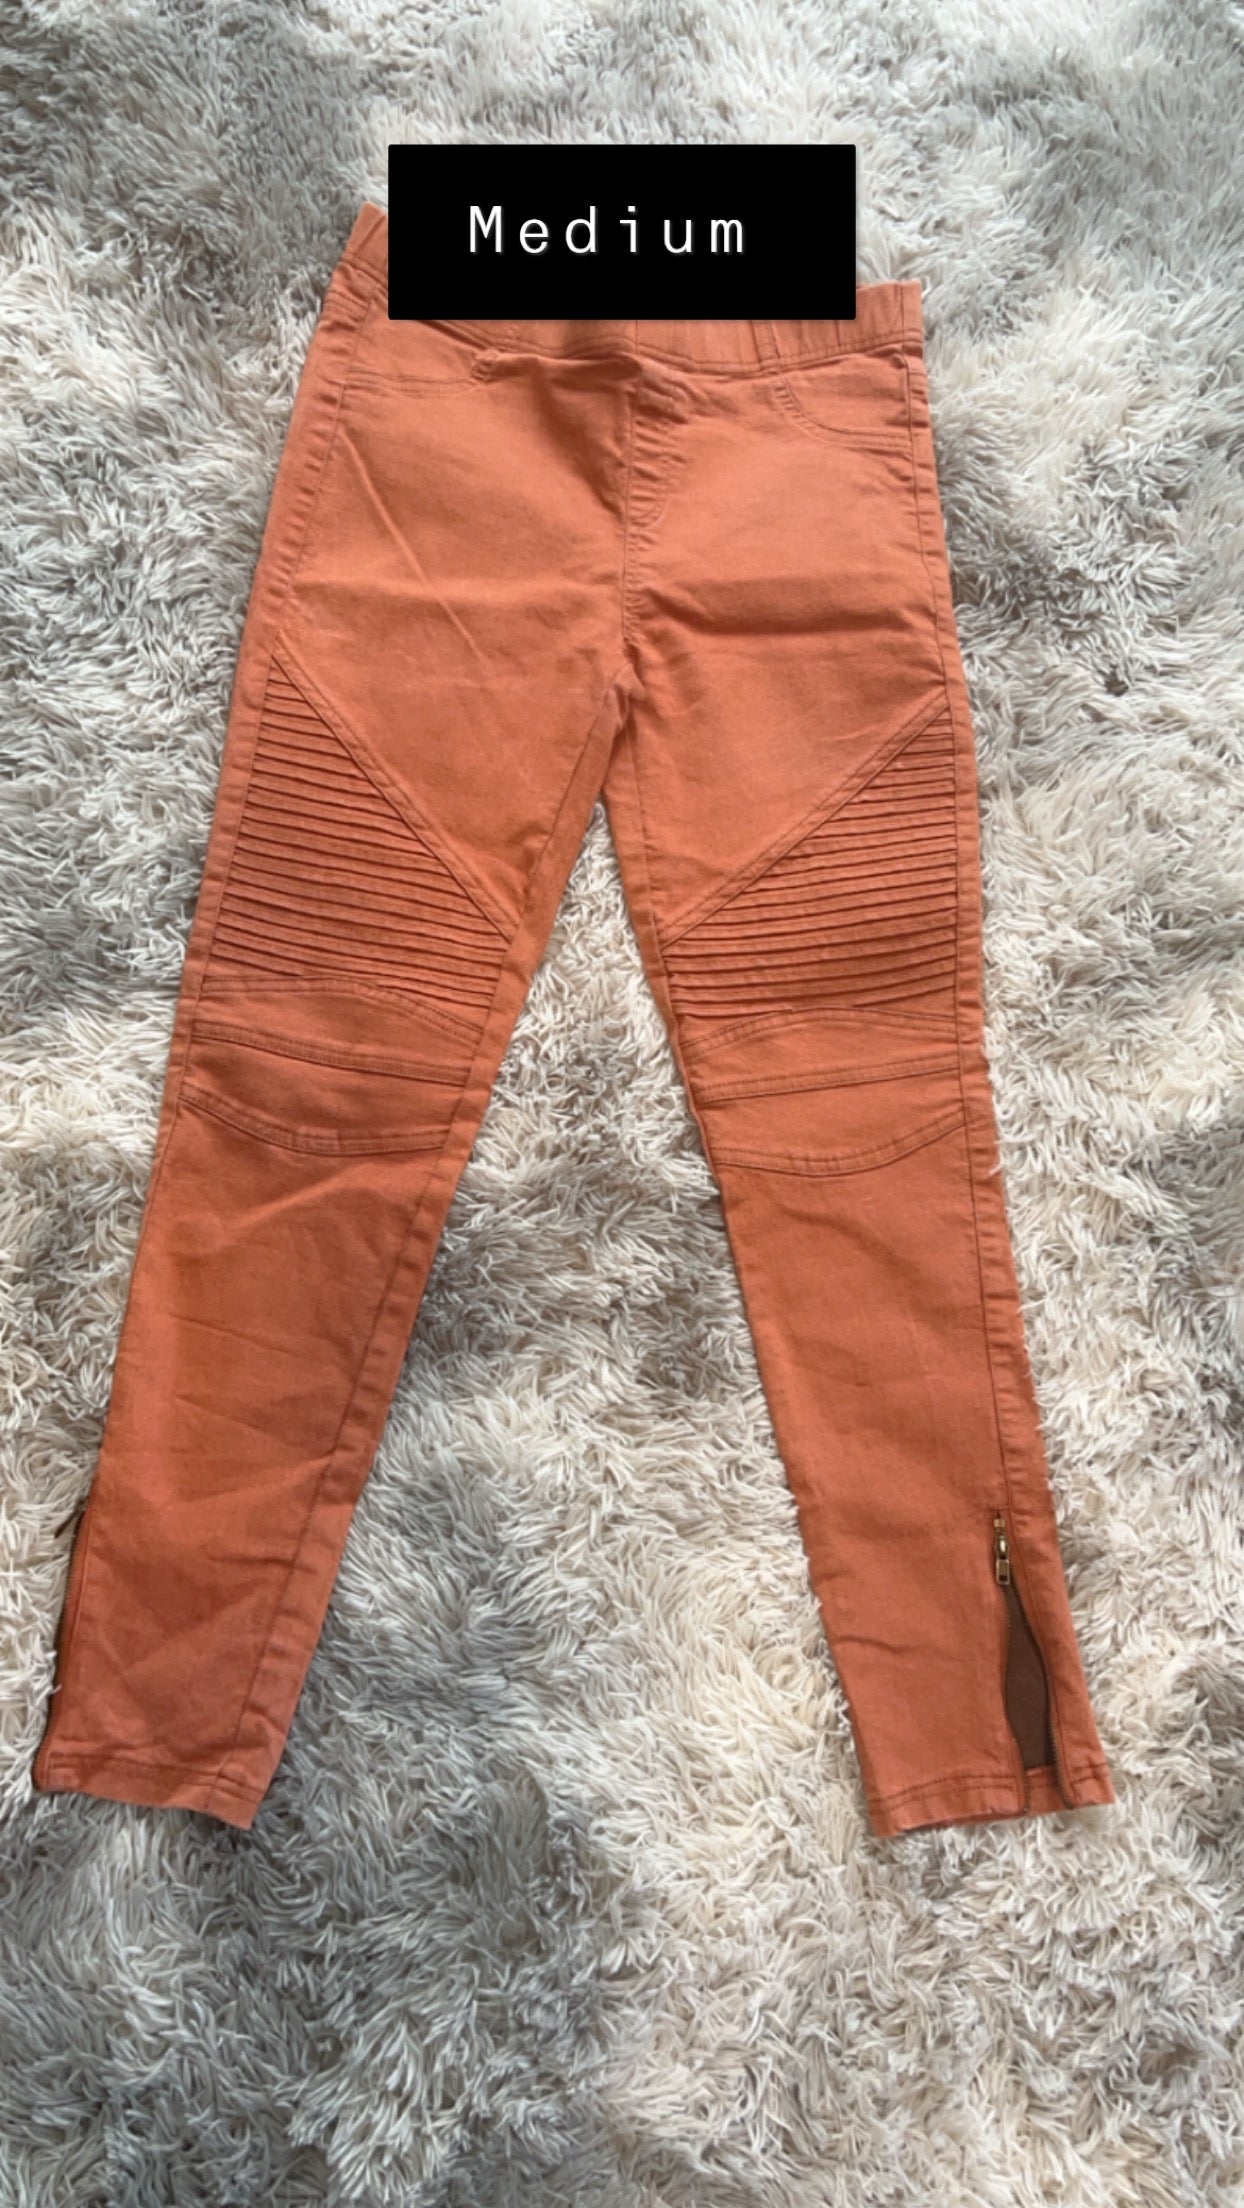 Burned Orange pants